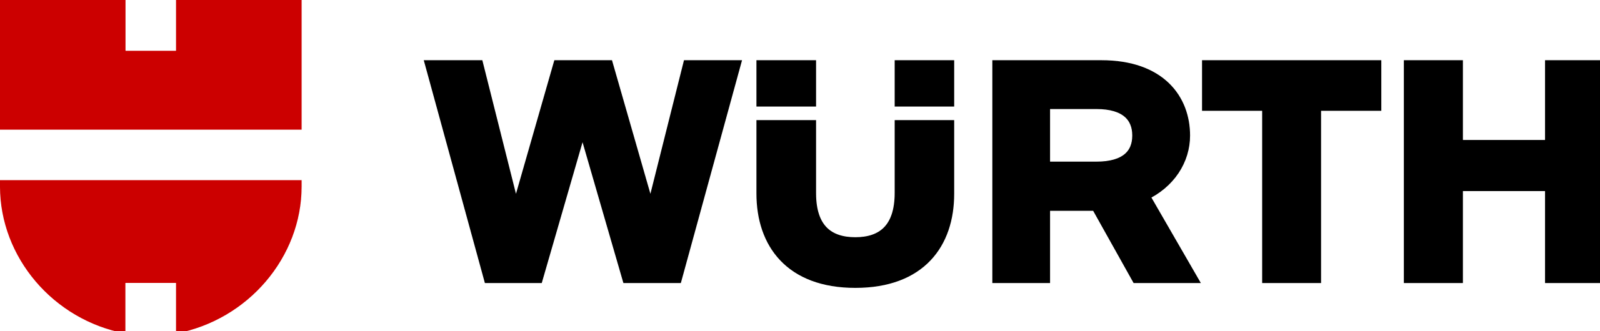 Wuerth_Logo_2010.svg.png